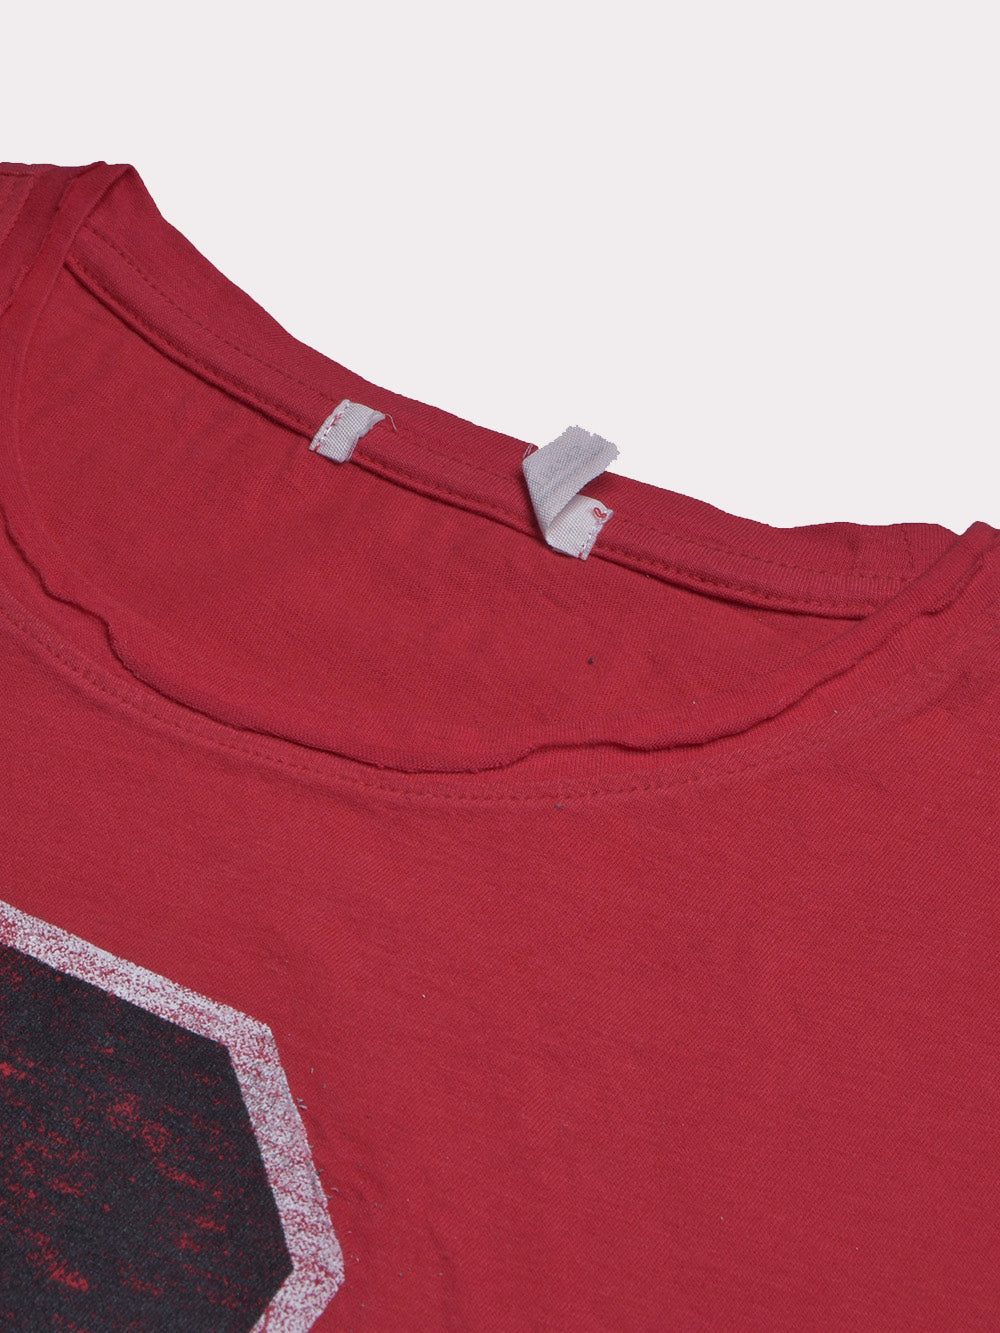 47 Raw Crew Neck Half Sleeve Tee Shirt For Men-Dark Red-BE1072